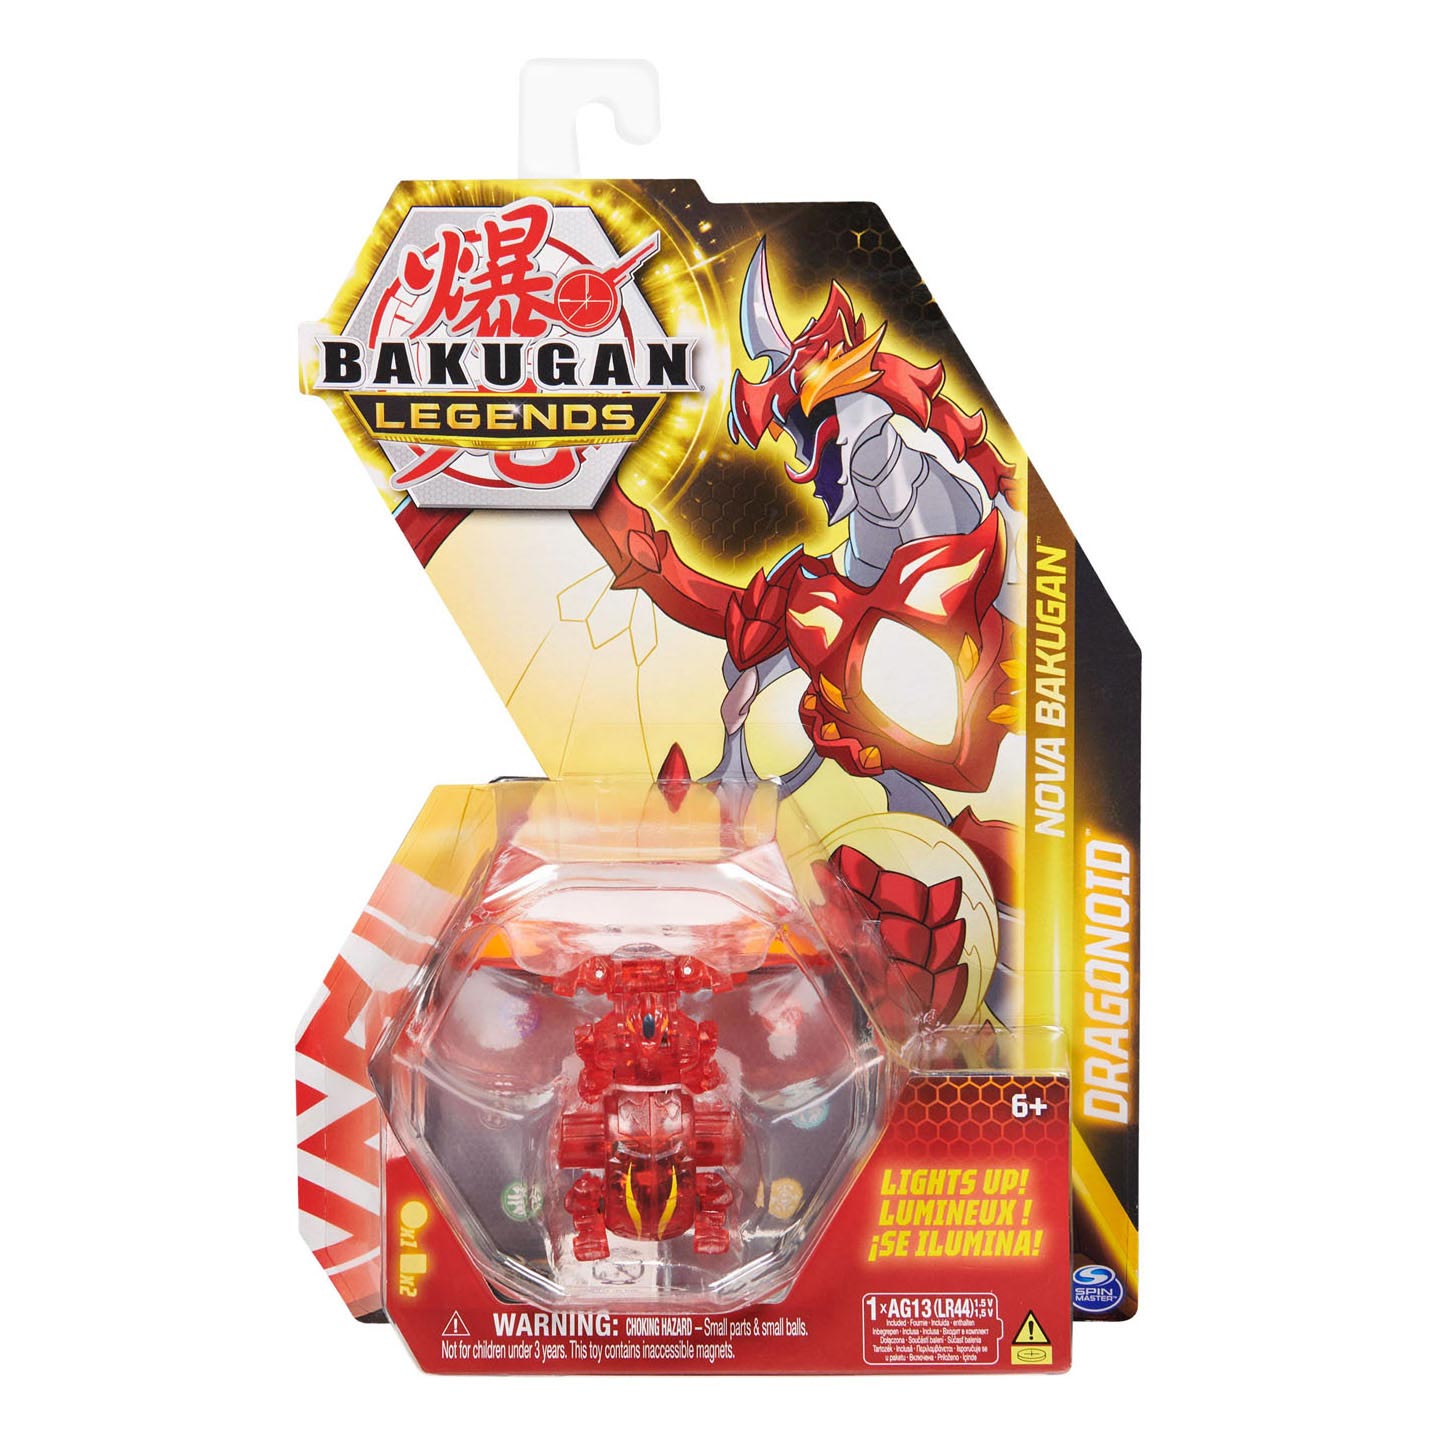 Bakugan Legends (S5) - Nova Basic Ball 1-pack